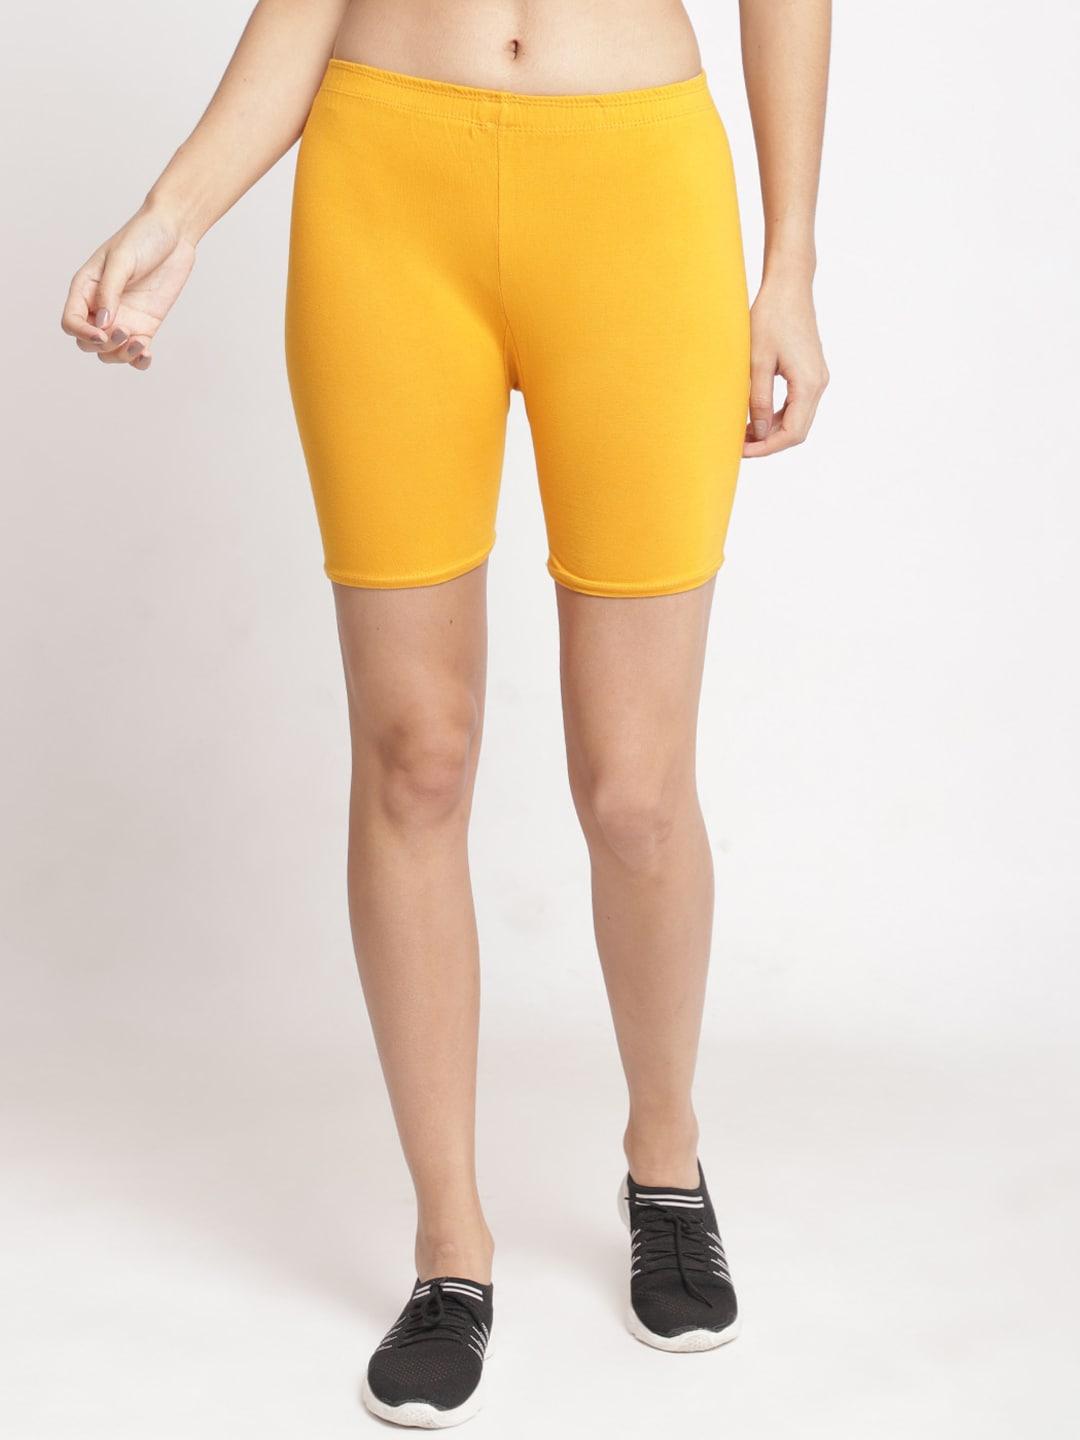 gracit-women-yellow-cycling-sports-shorts